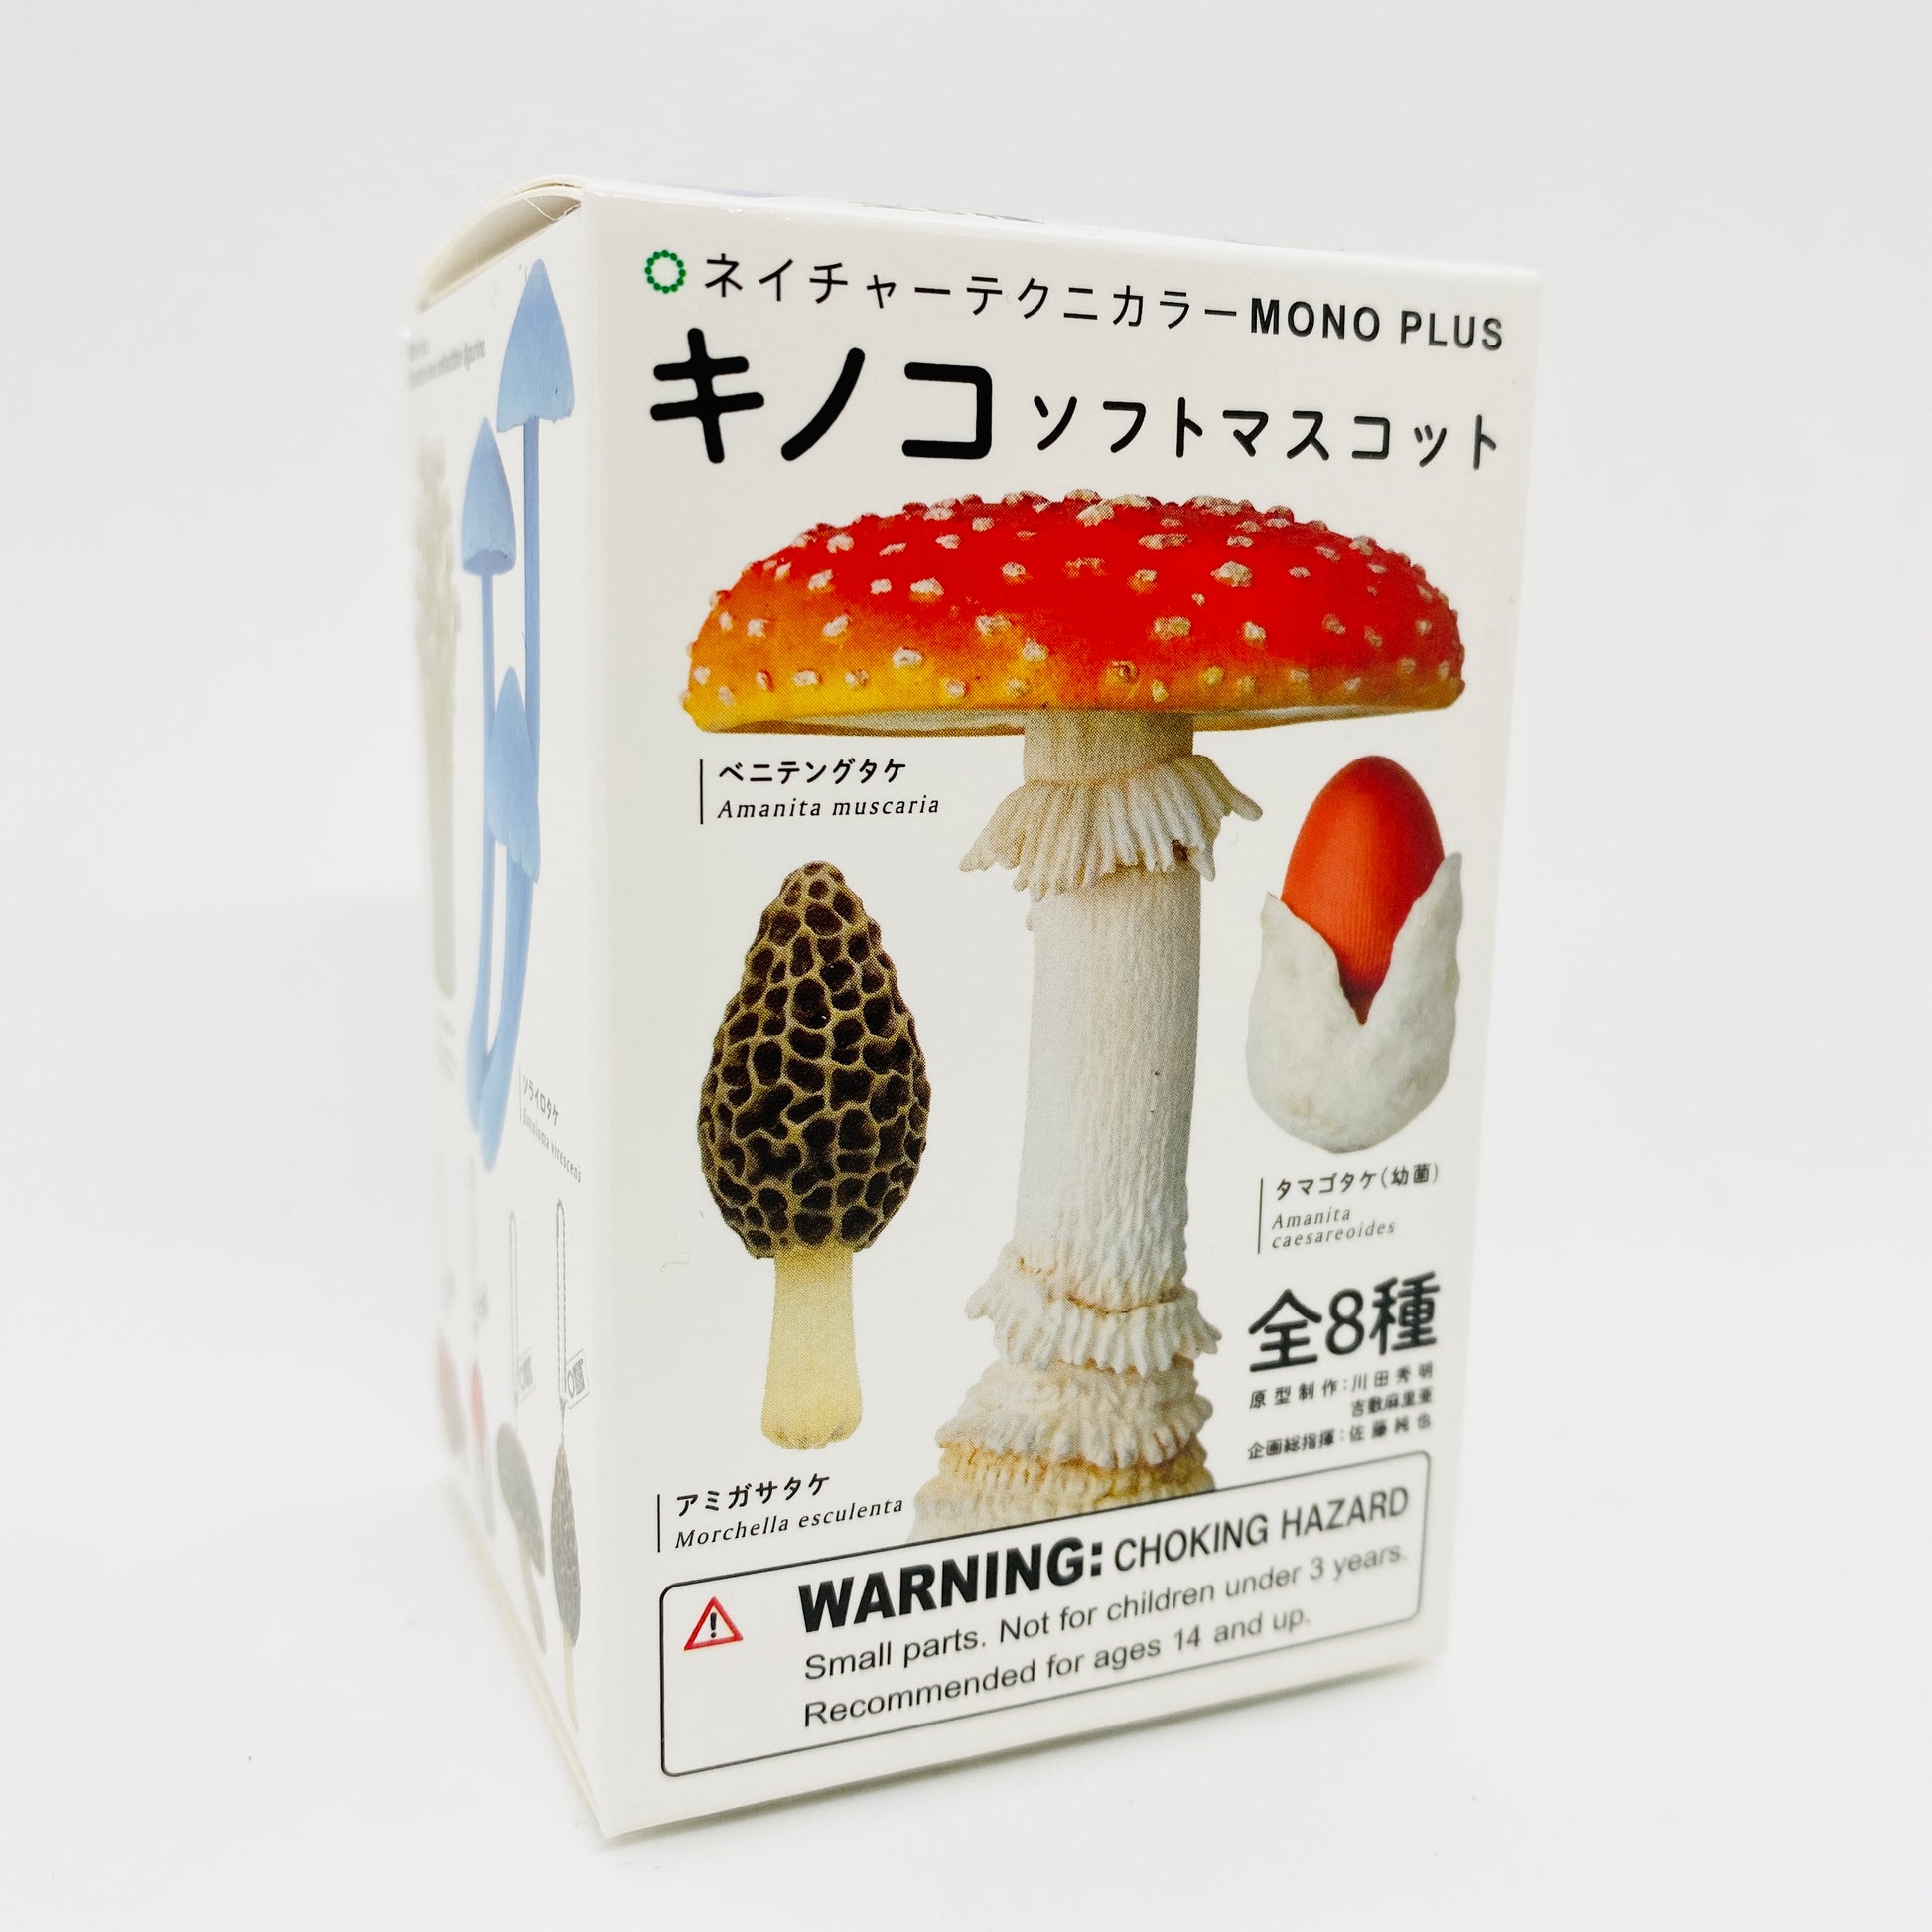 Mushroom Rubber Charm Blind Box (White Box)